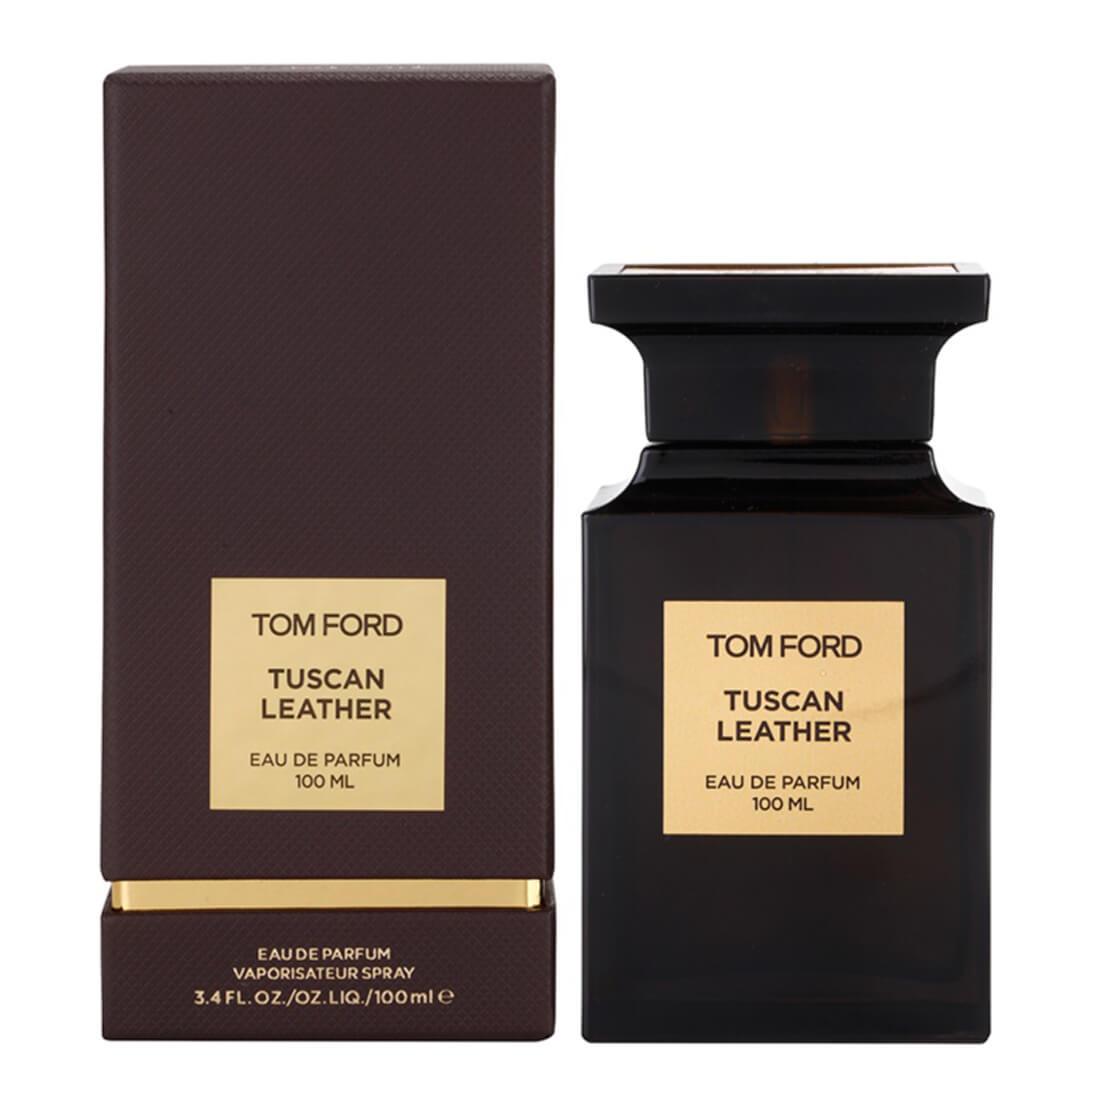 Tom Ford Tuscan Leather Eau De Perfume